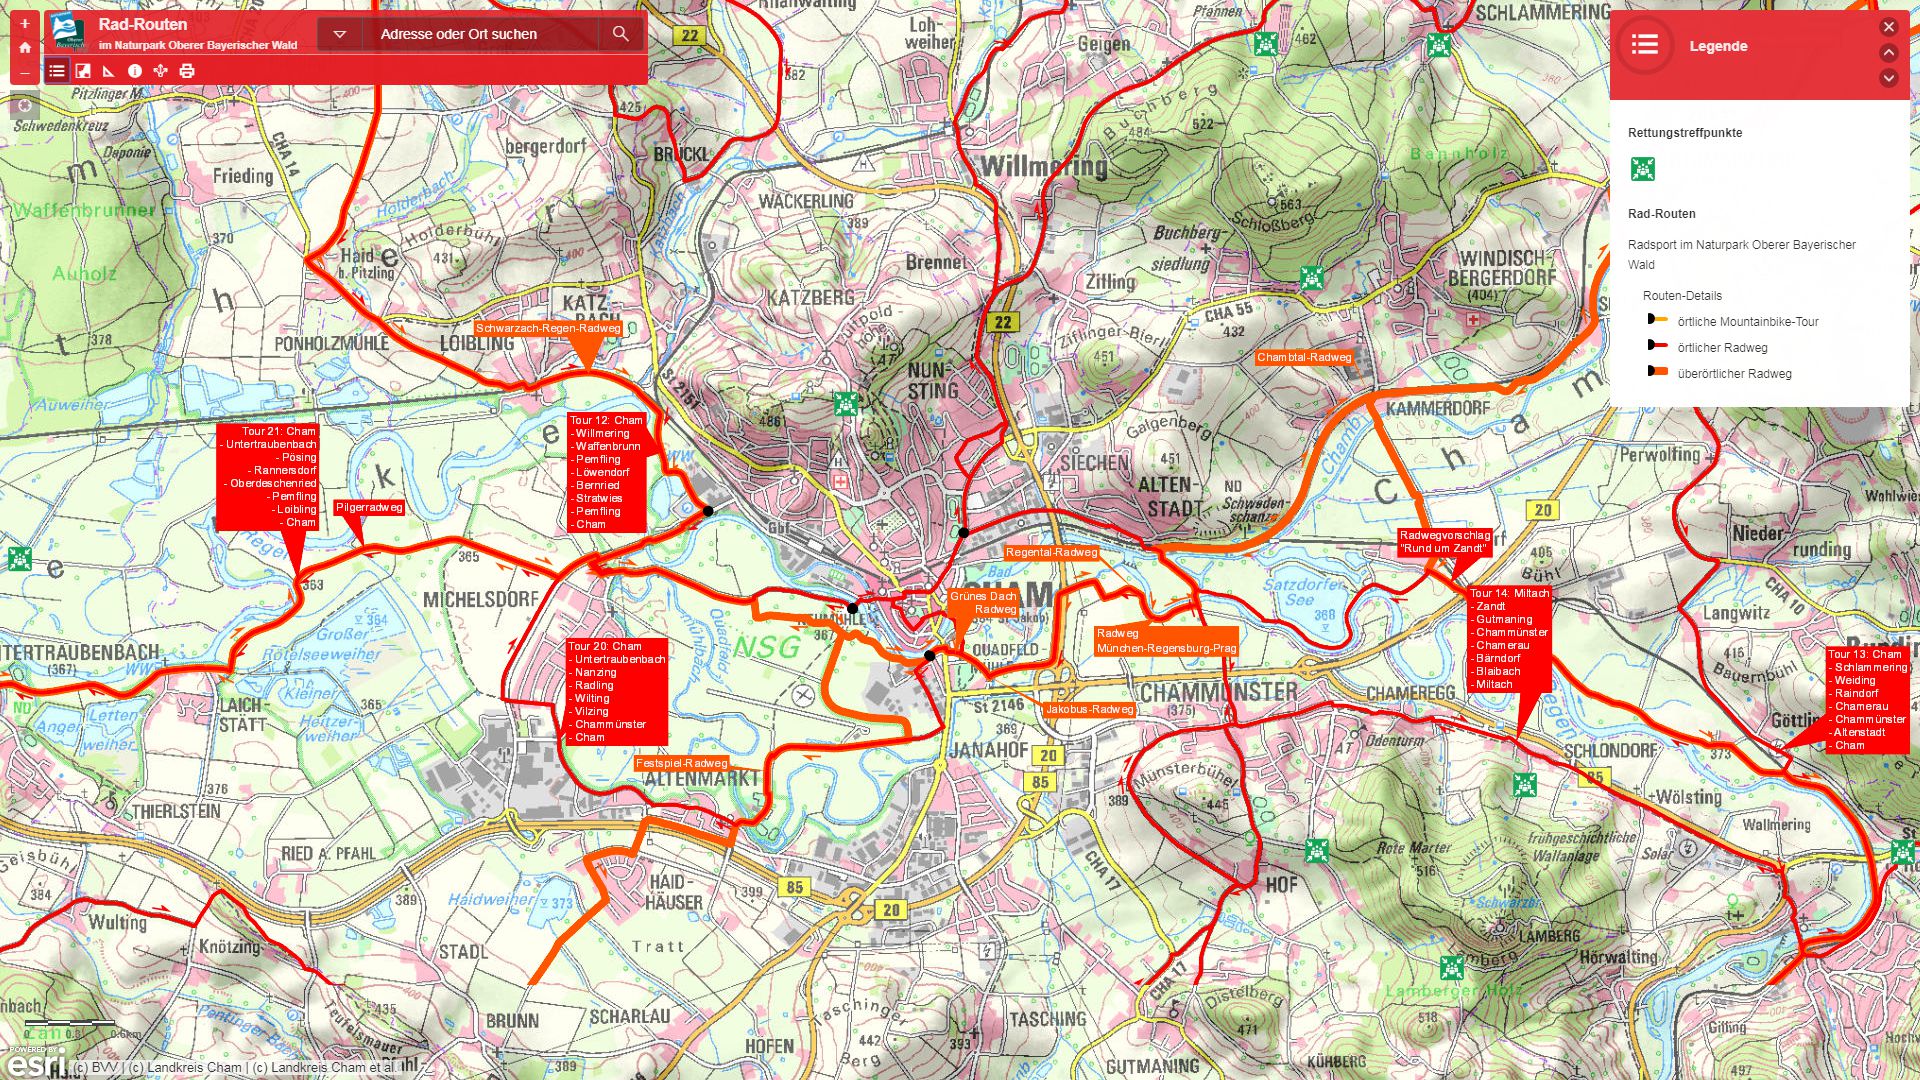 Zur externen GIS-Map Rad-Routen unter arcgis.com